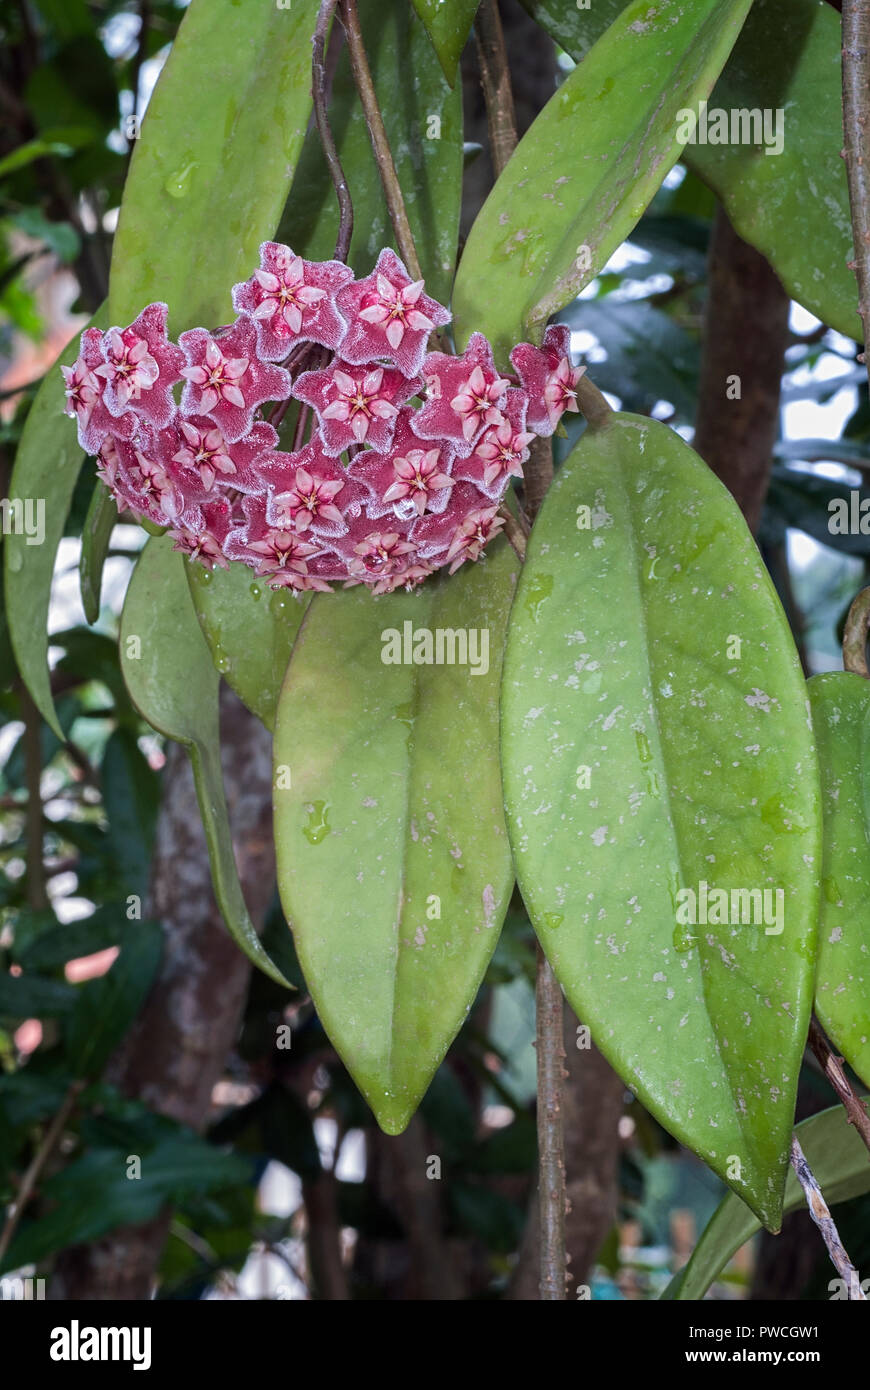 Hoya pubicalyx giardino giungla, Asclepiadaceae, foglie e infiorescenza, vite, piante ornamentali Foto Stock